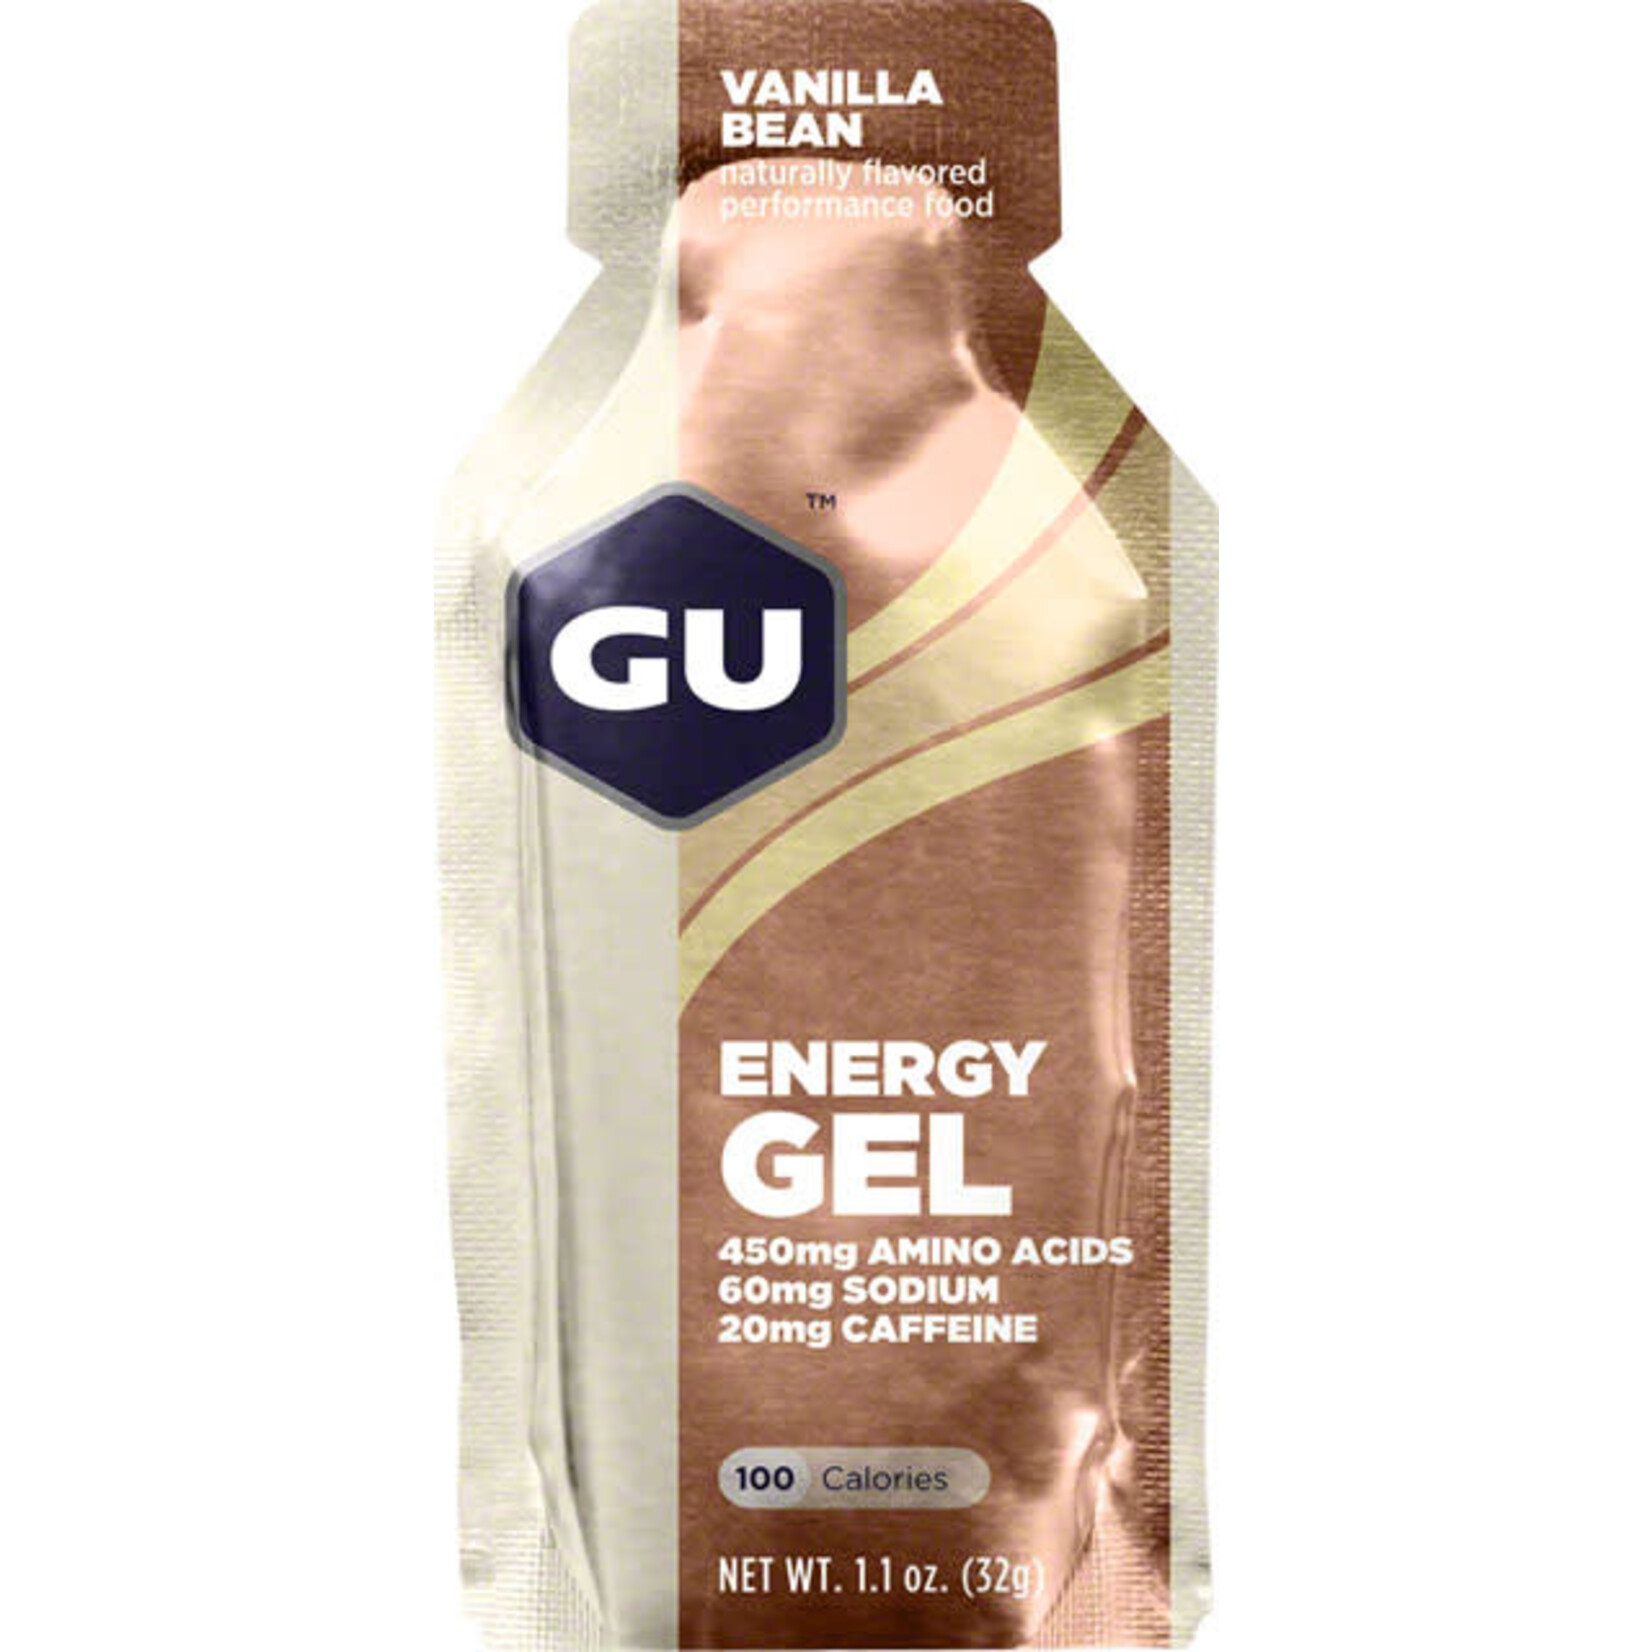 GU GU Energy Gel - Vanilla Bean, single